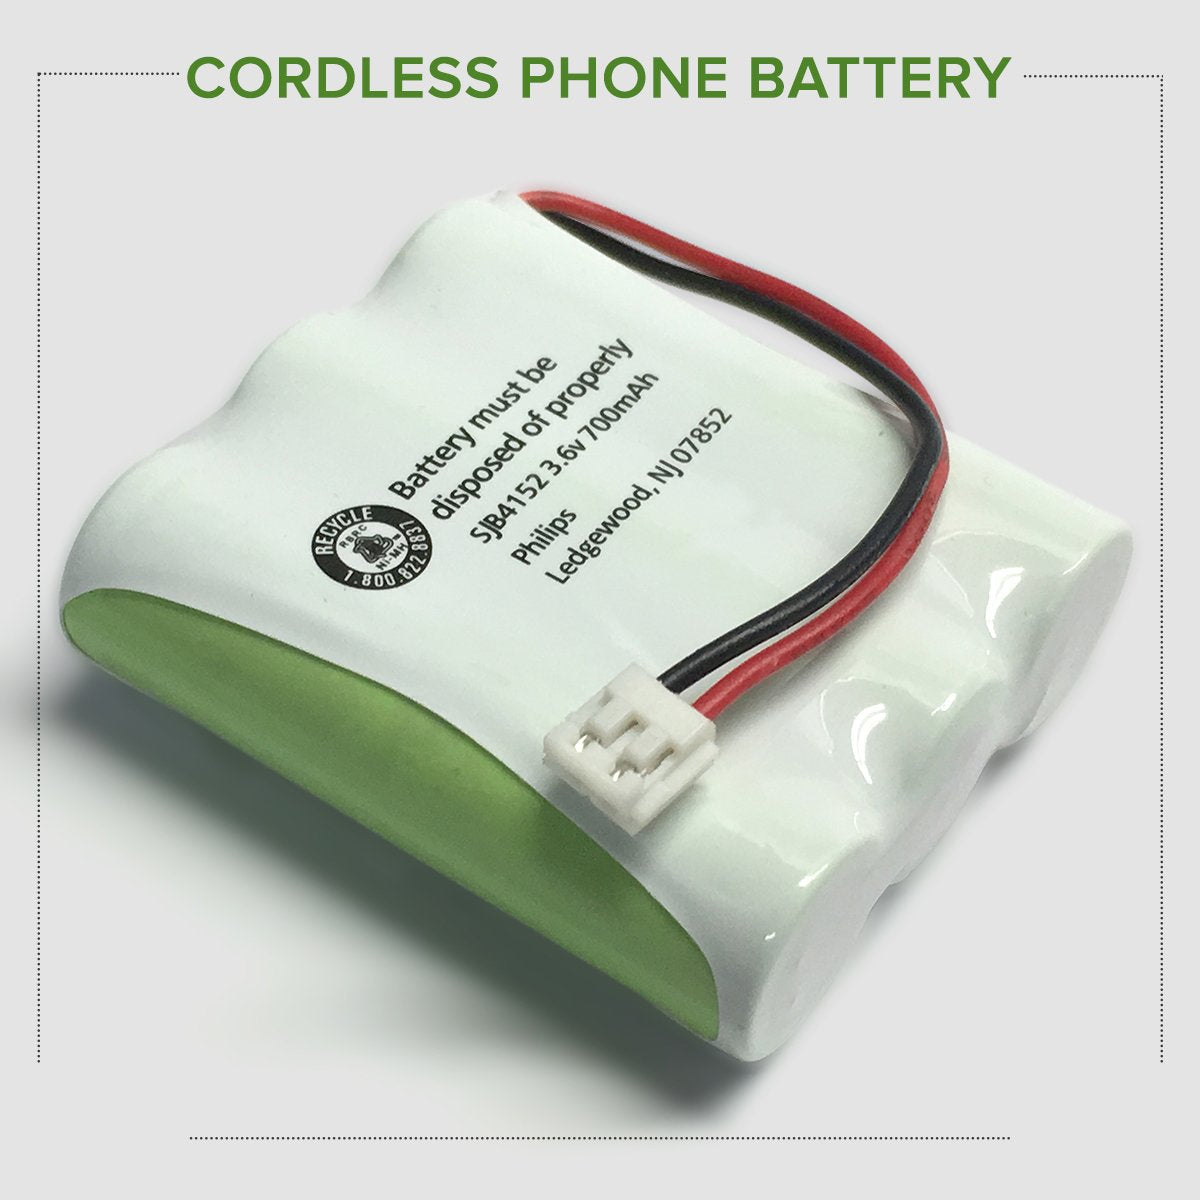 GE 2-7000 Cordless Phone Battery